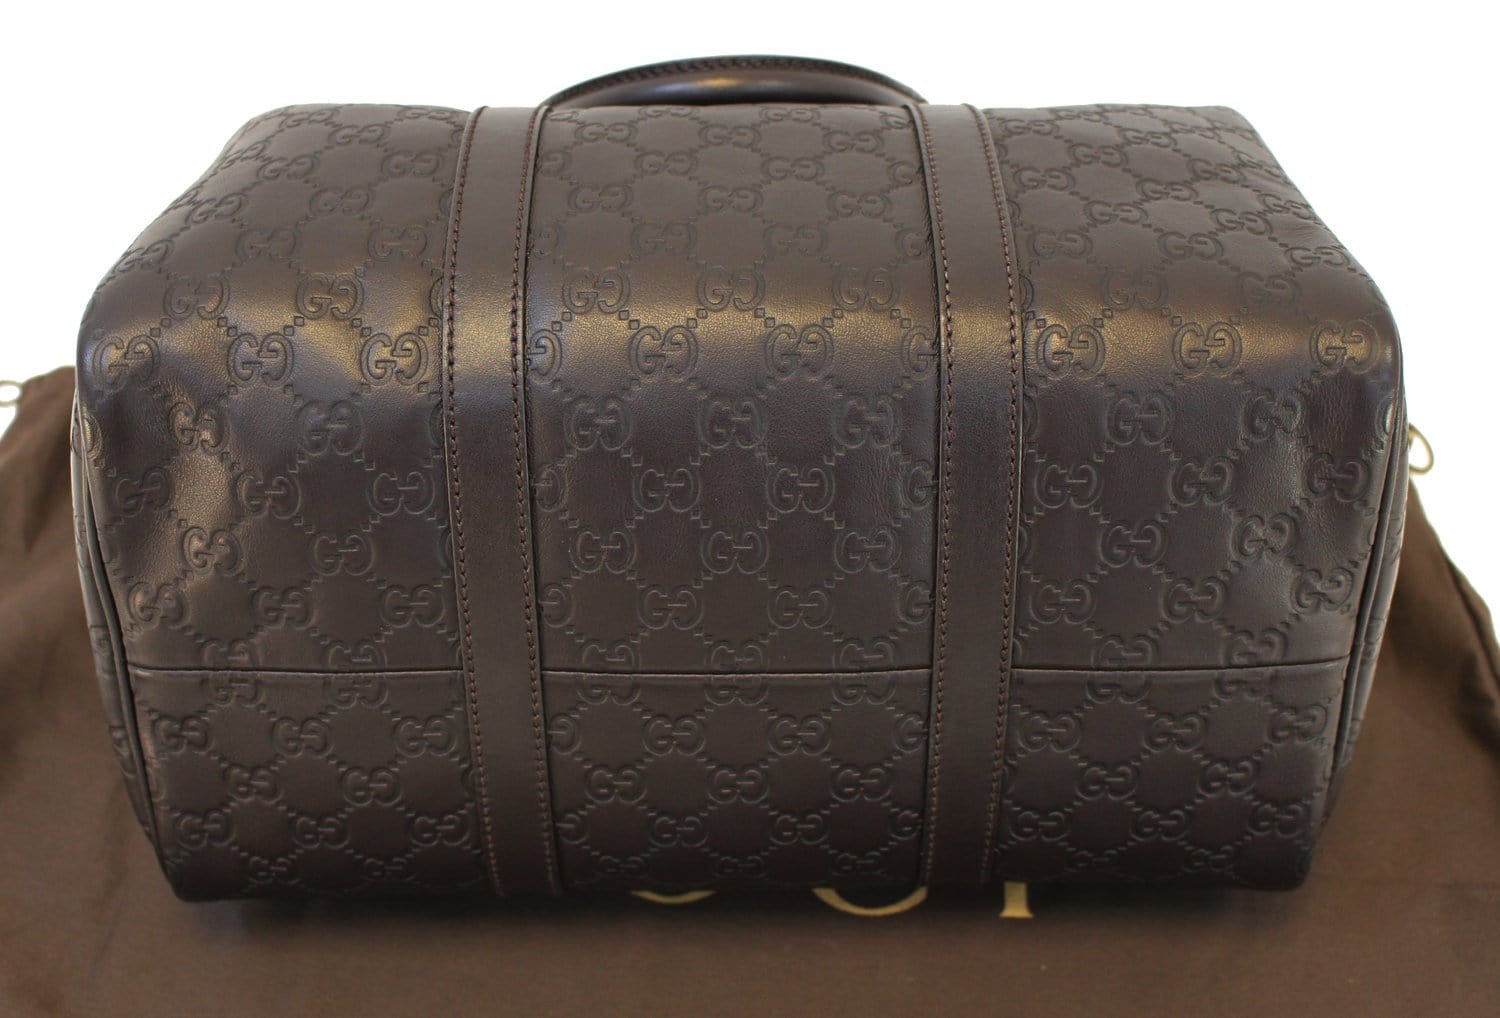 Gaston tool bag – “Musette” - Dark Khaki stonewashed